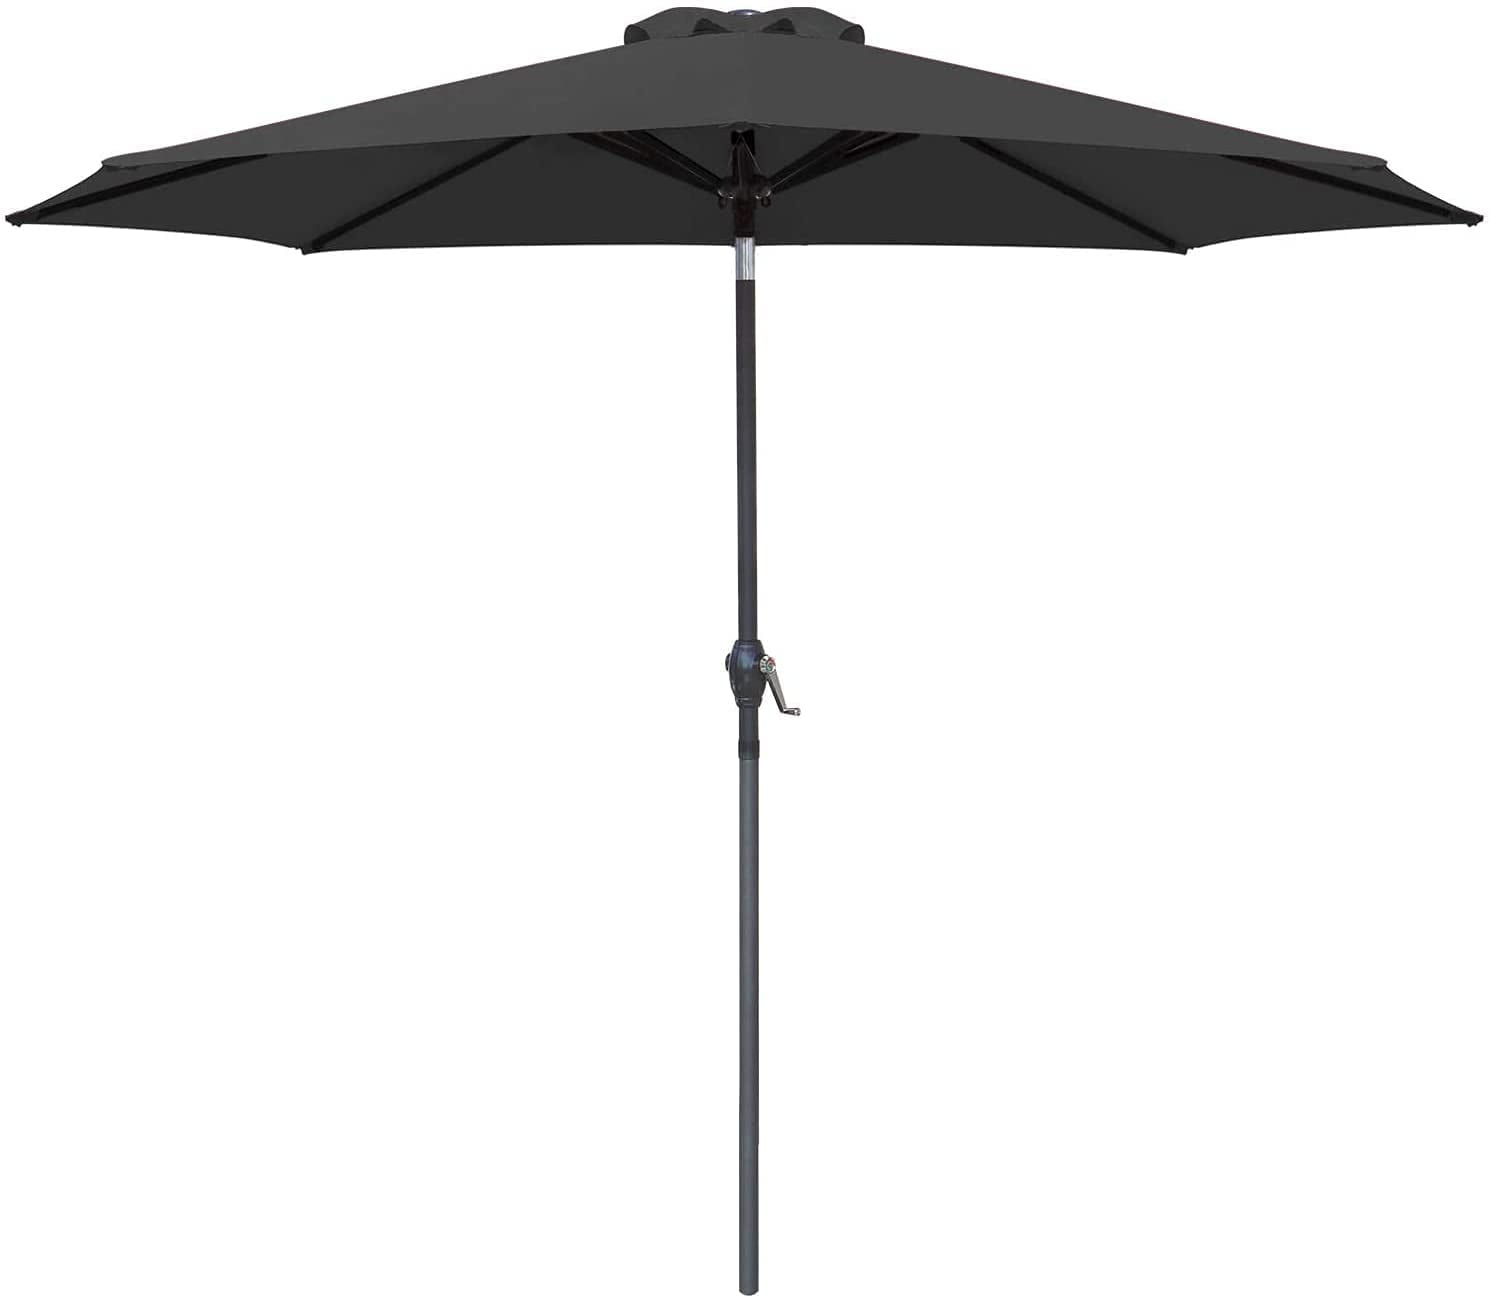 Devoko 9FT Patio Umbrella Outdoor Table Umbrella with 8 Sturdy Ribs, Black